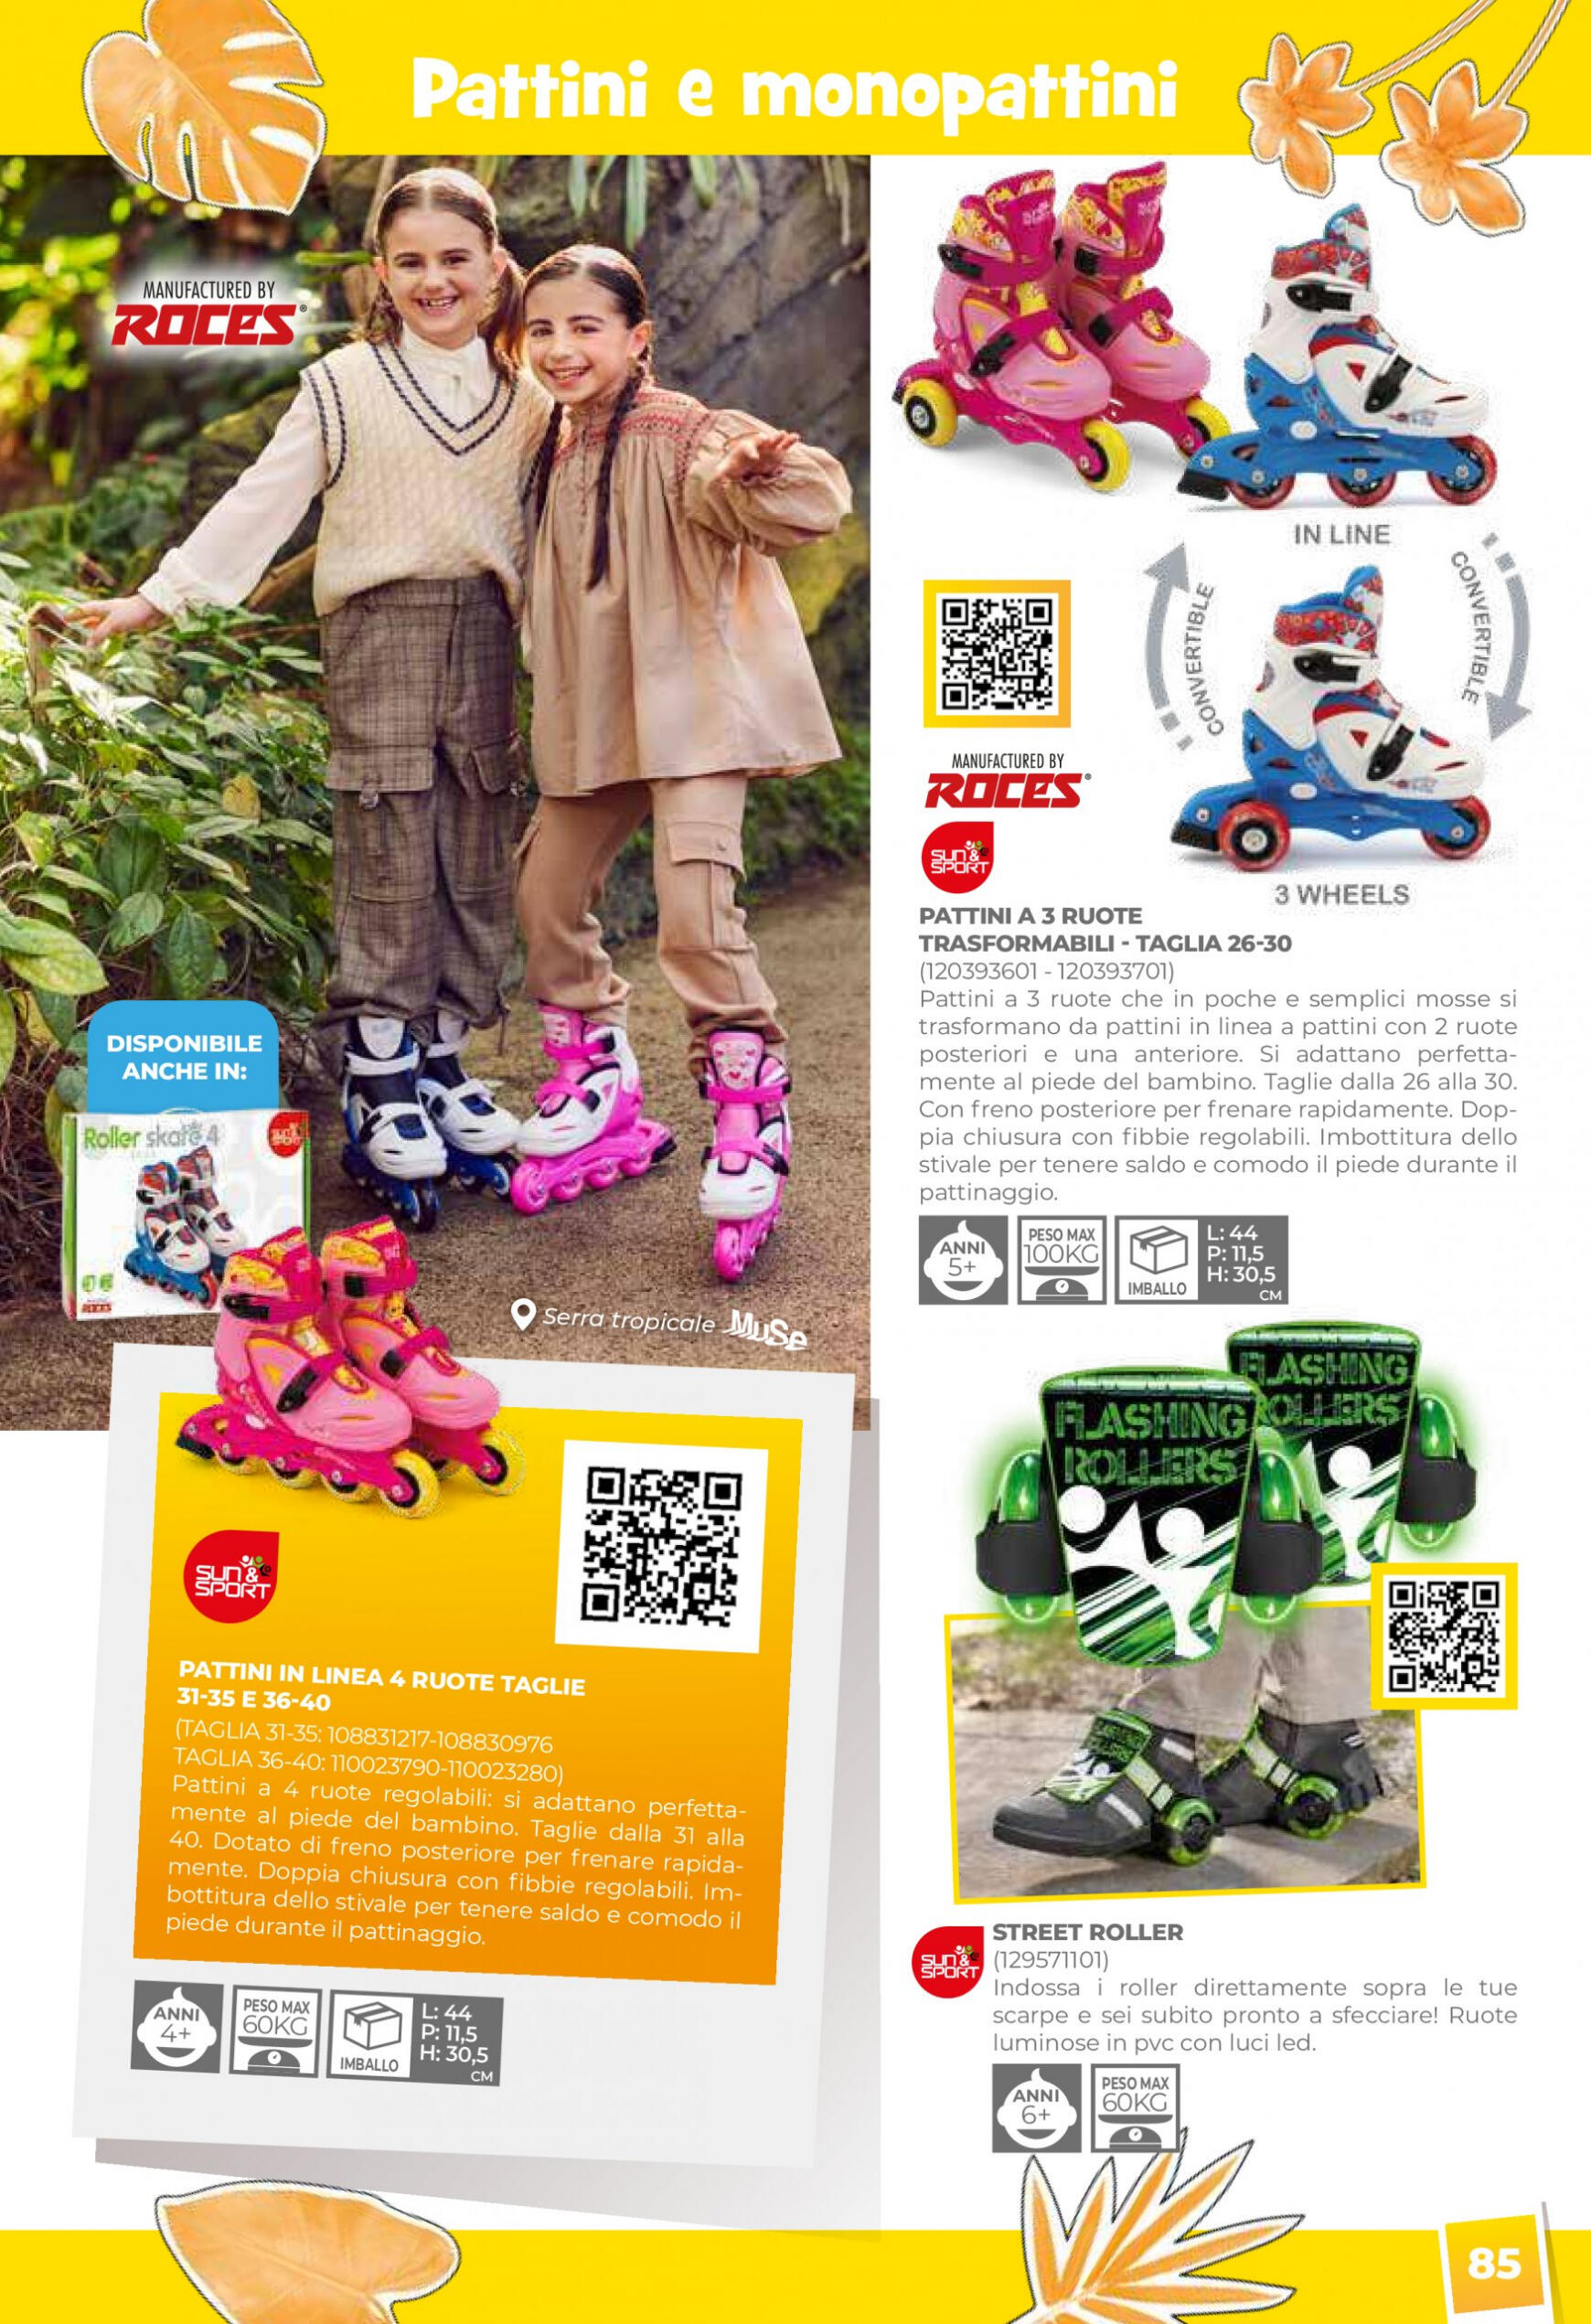 toys-center - Nuovo volantino Toys Center 01.05. - 31.12. - page: 87